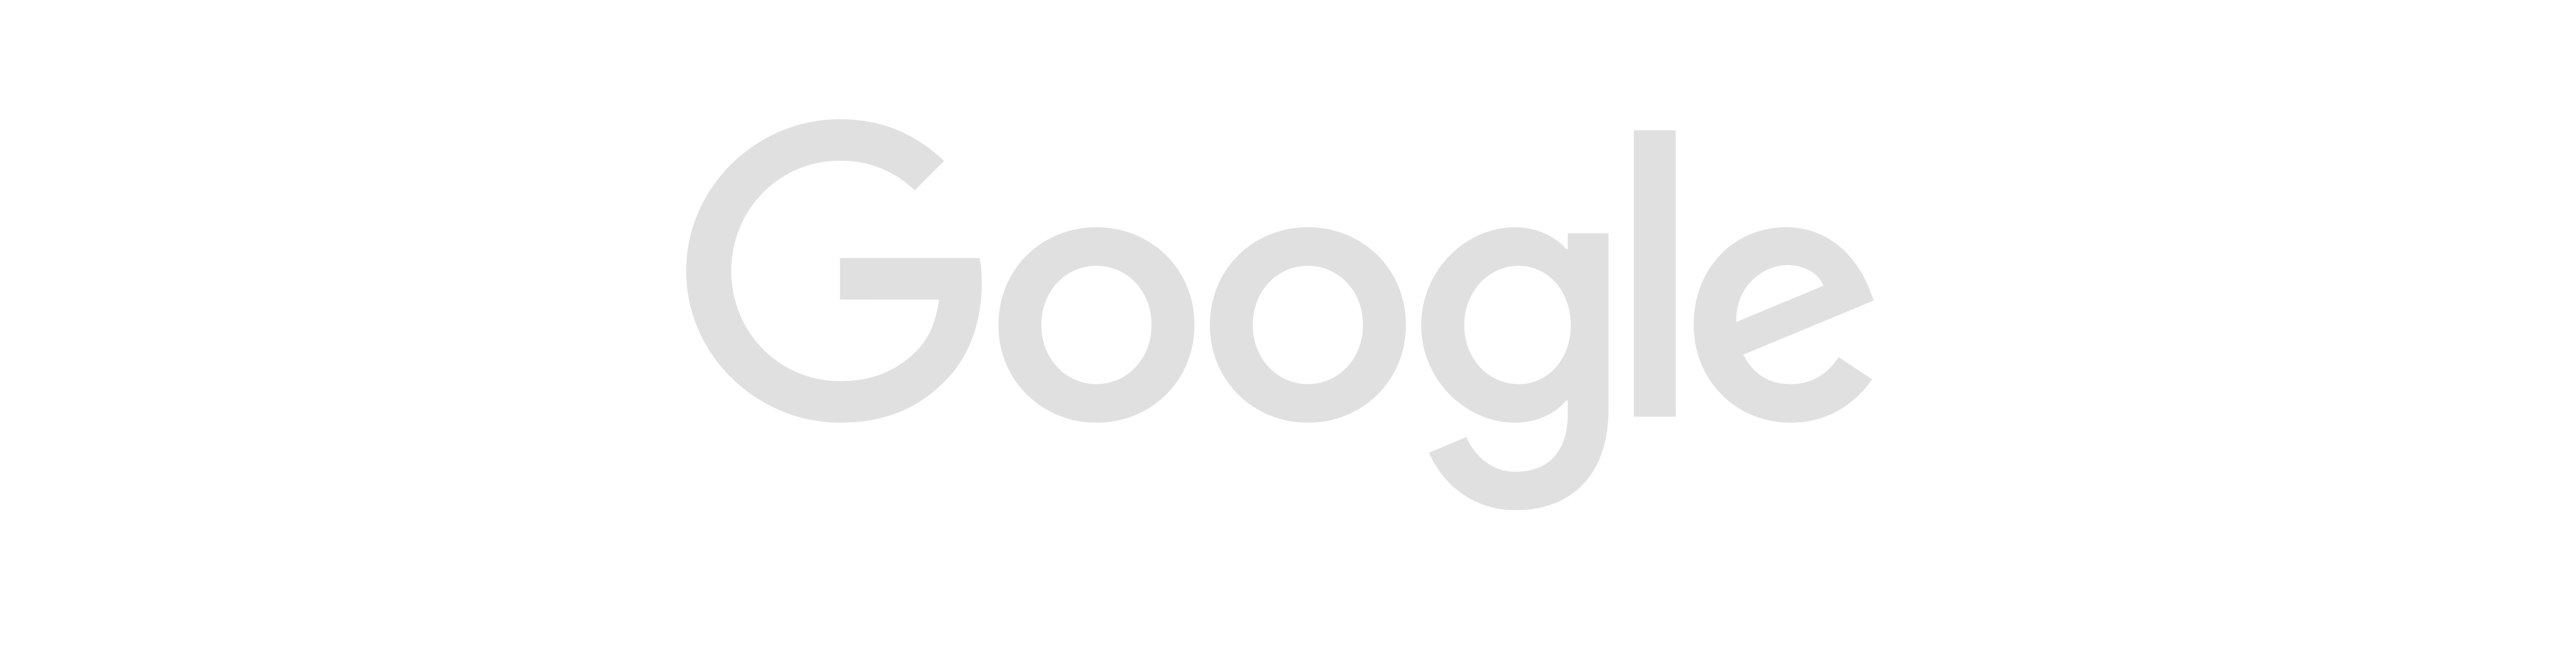 google_logo.svg